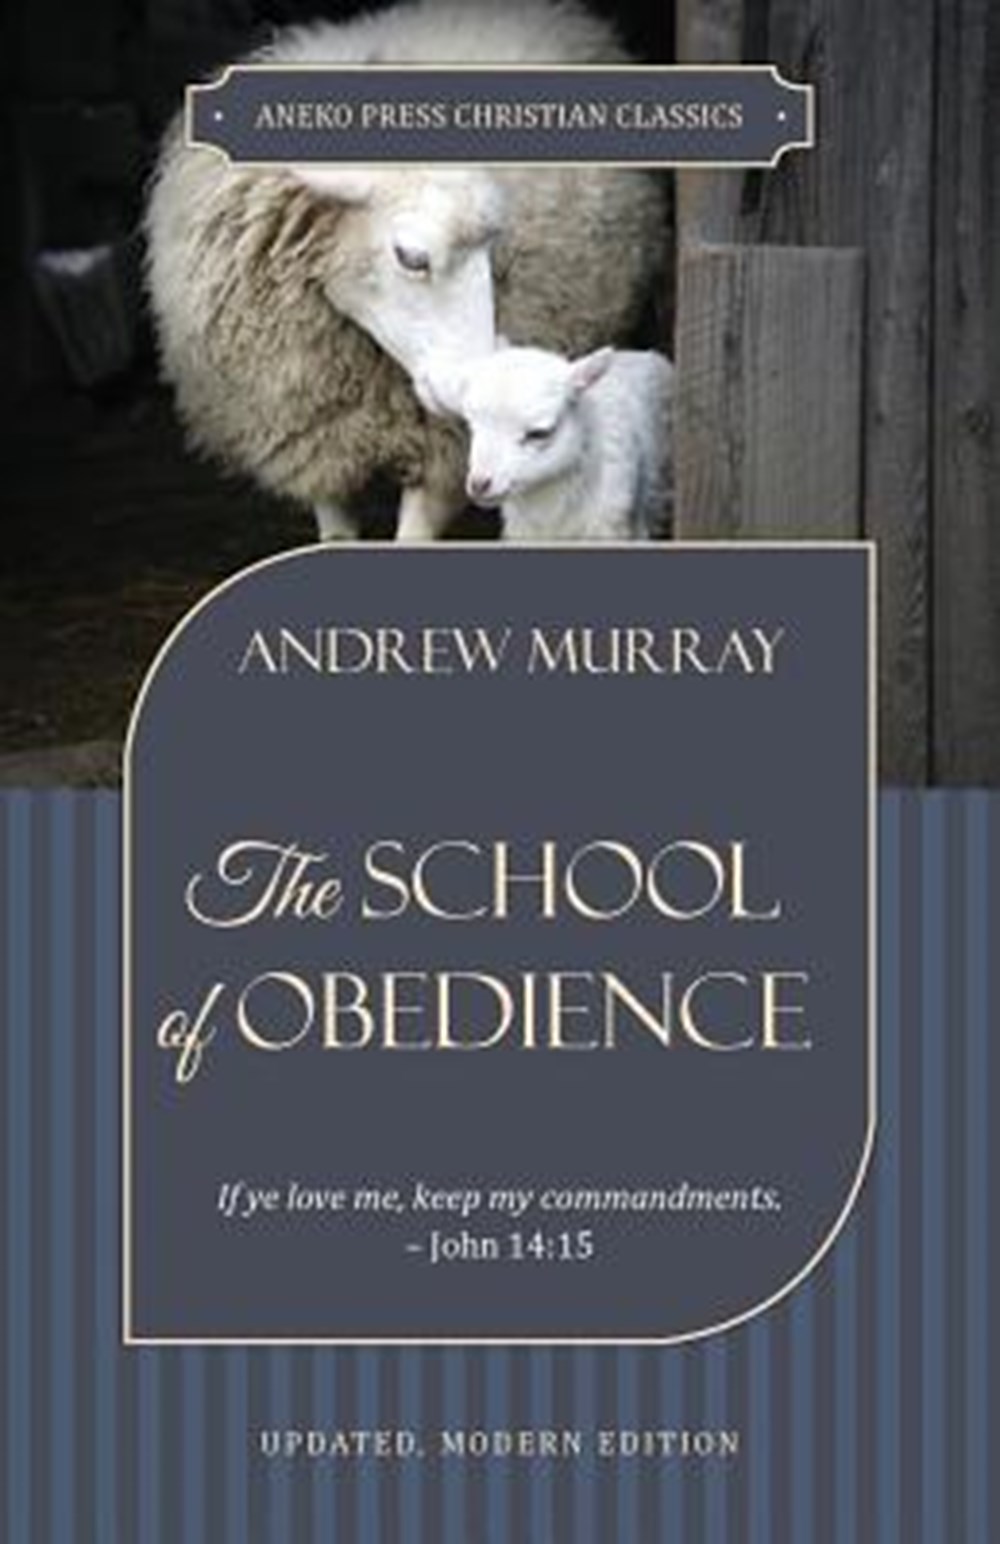 School of Obedience If ye love me, keep my commandments - John 14:15